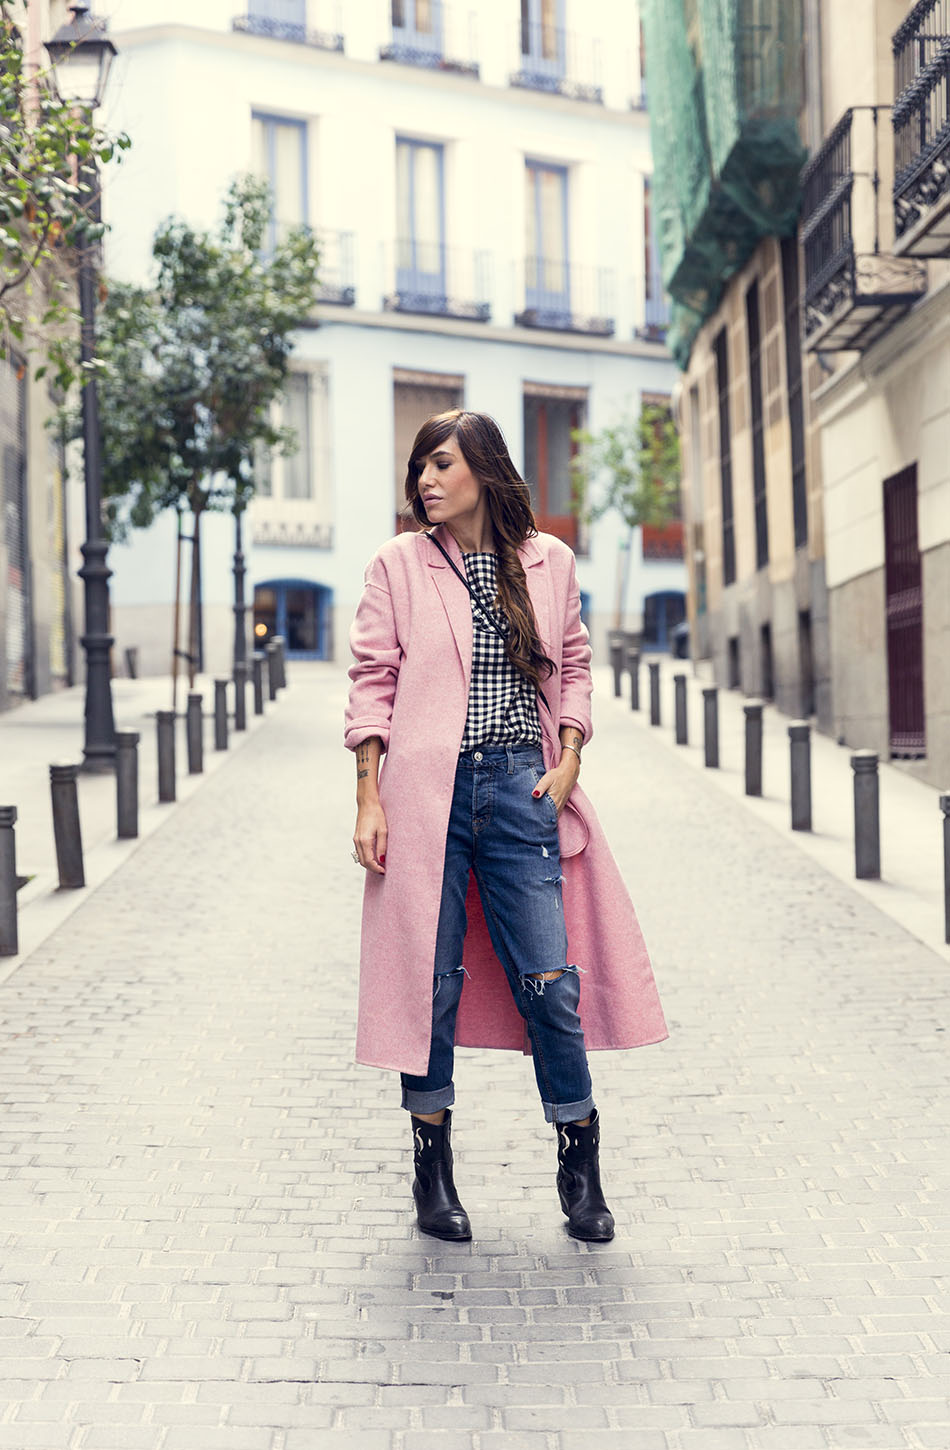 street-style-leonce-shop-zara-pink-coat-hakei-boots-denim-jeans-12 - Crespo